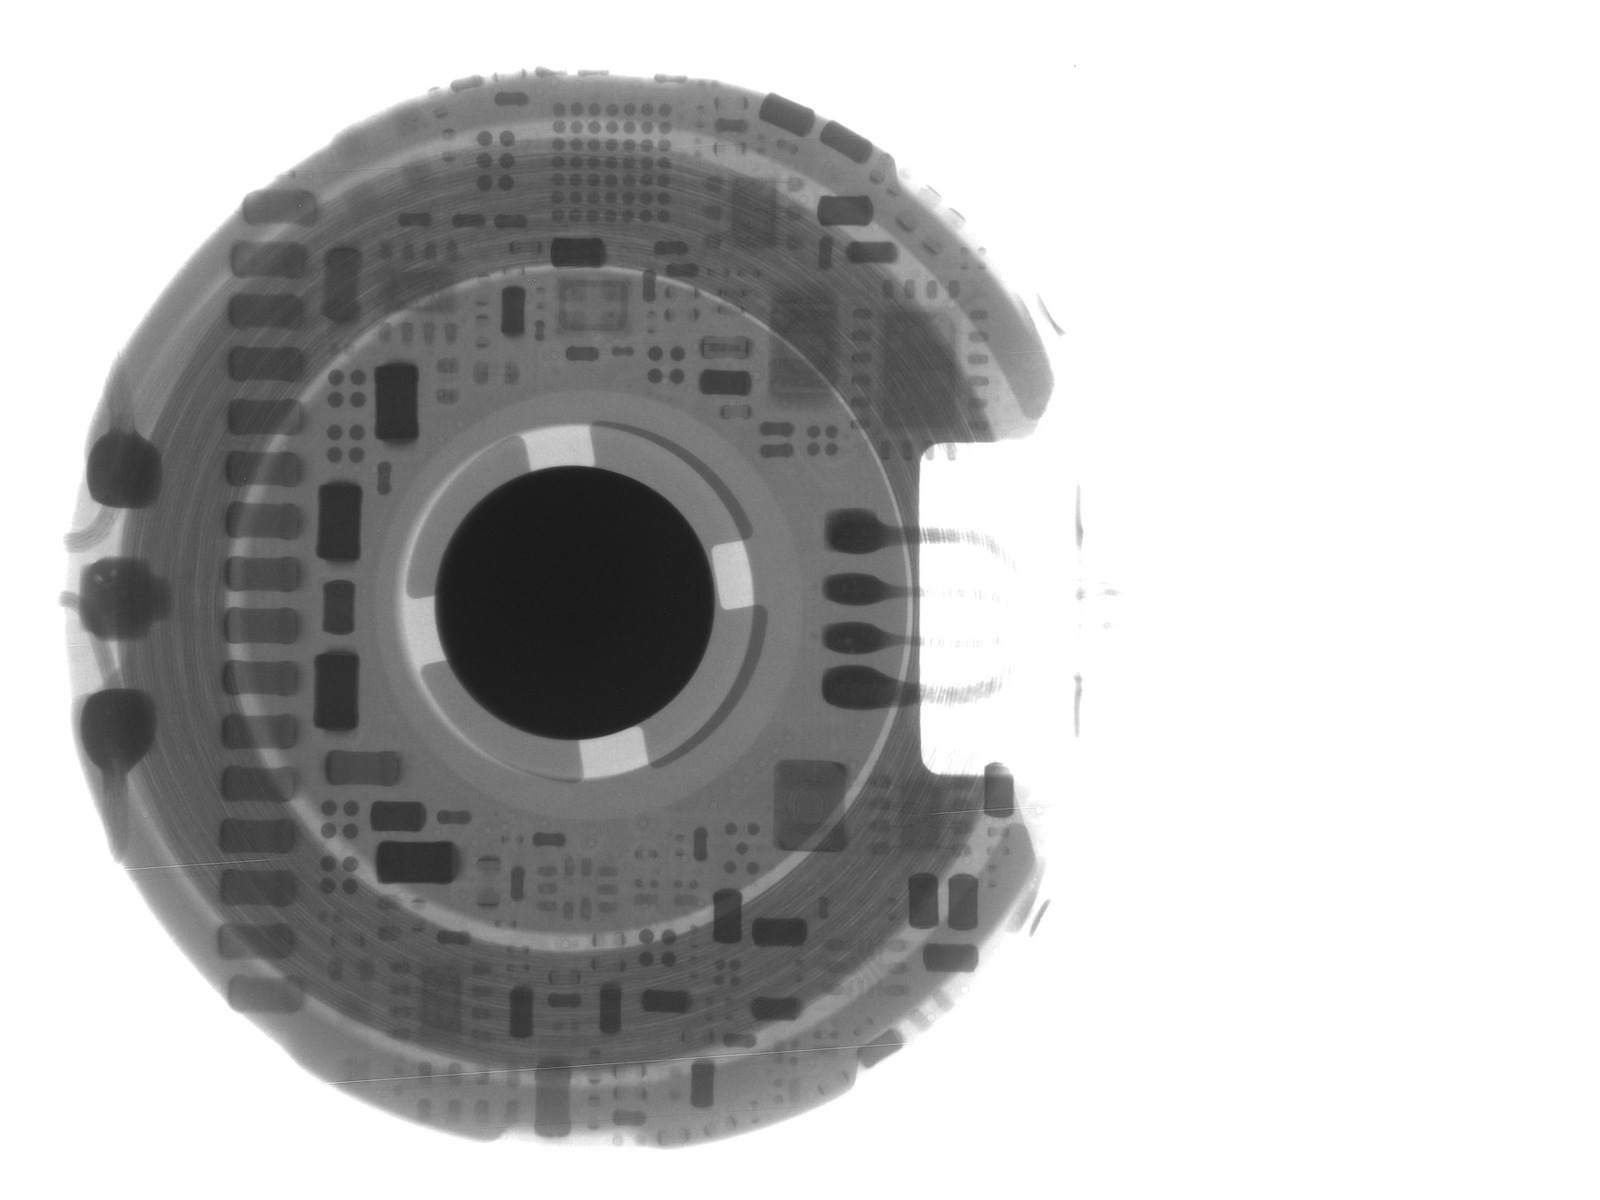 chip S1 Apple Watch scannet røntgen 2 - iDevice.ro